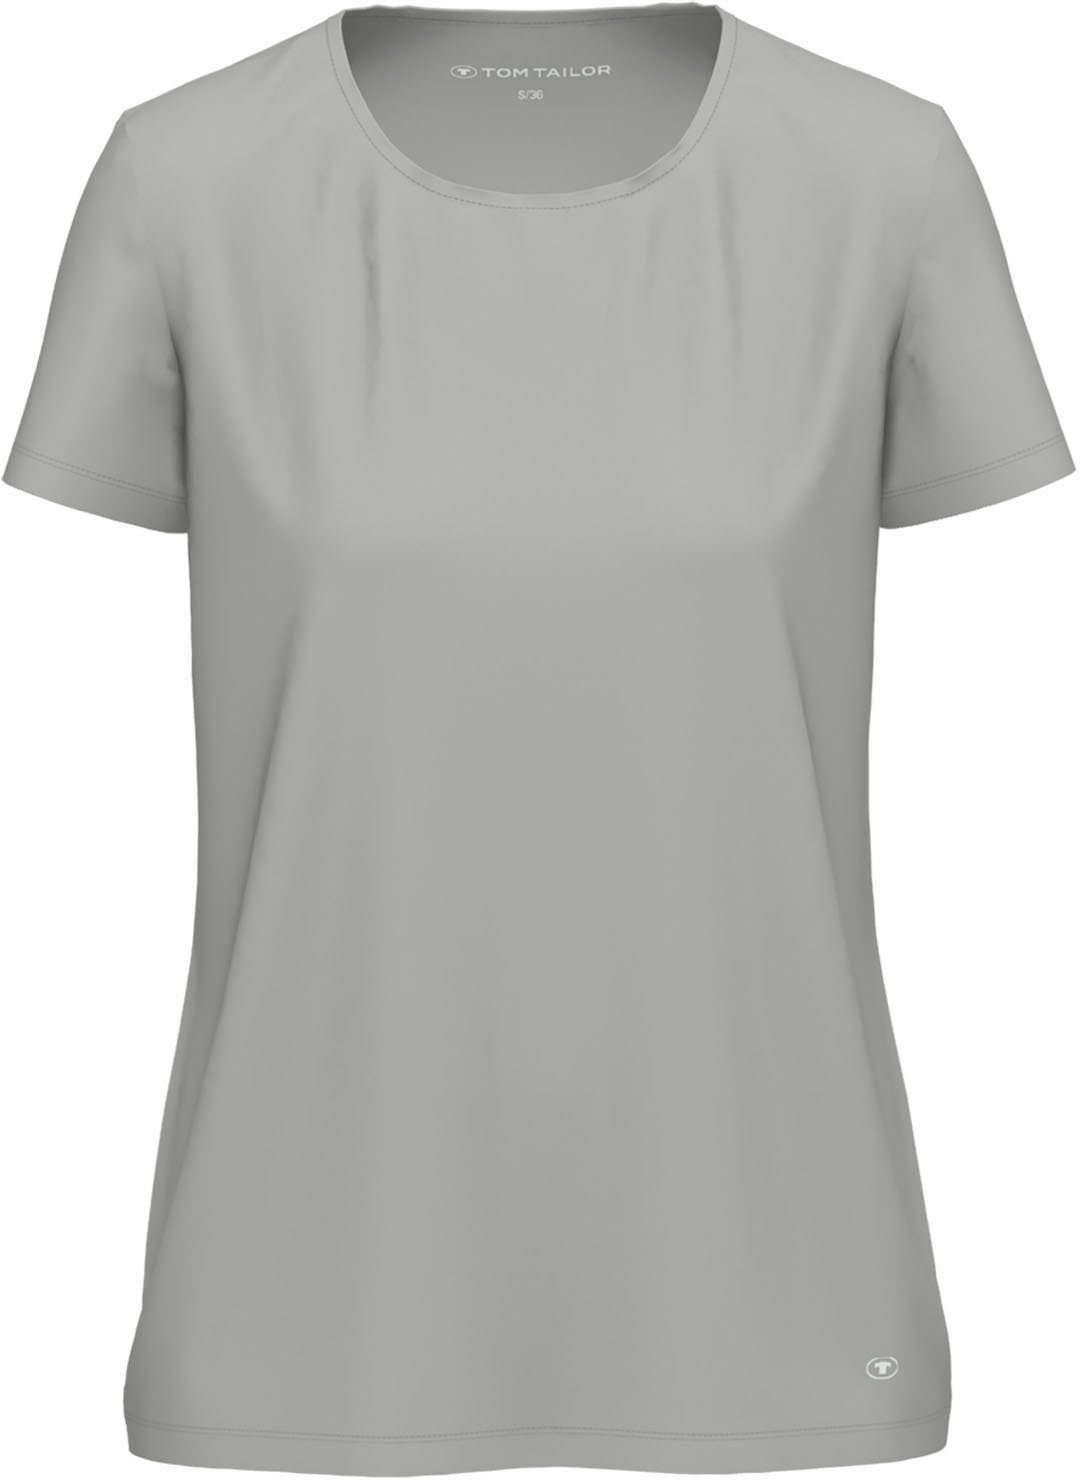 TAILOR grau-mittel-uni T-Shirt TOM